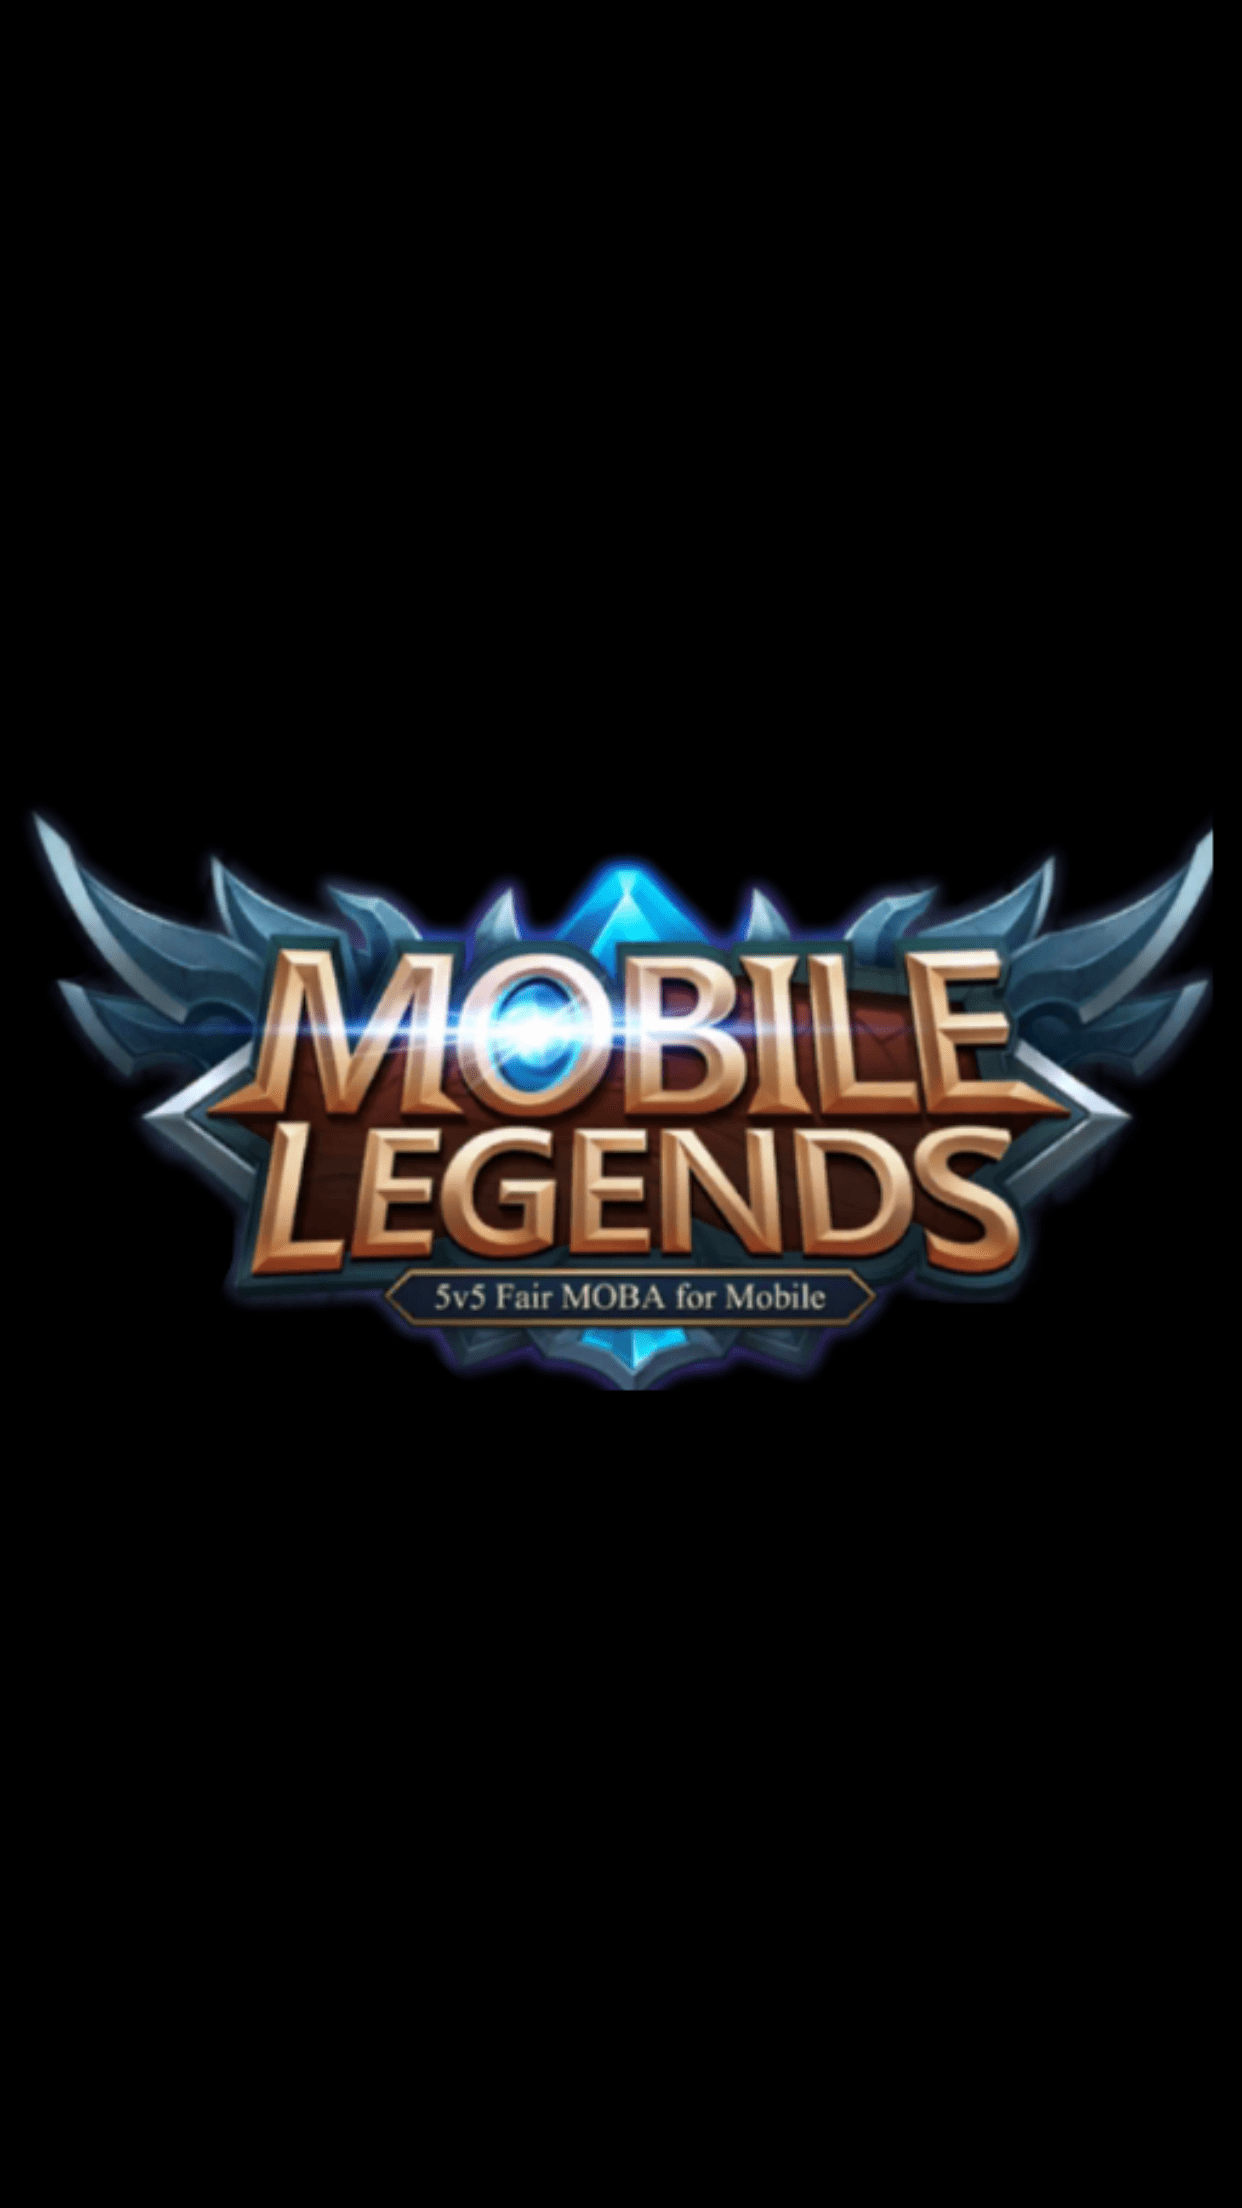 Mobile Legends Logo Wallpapers - Top Free Mobile Legends Logo